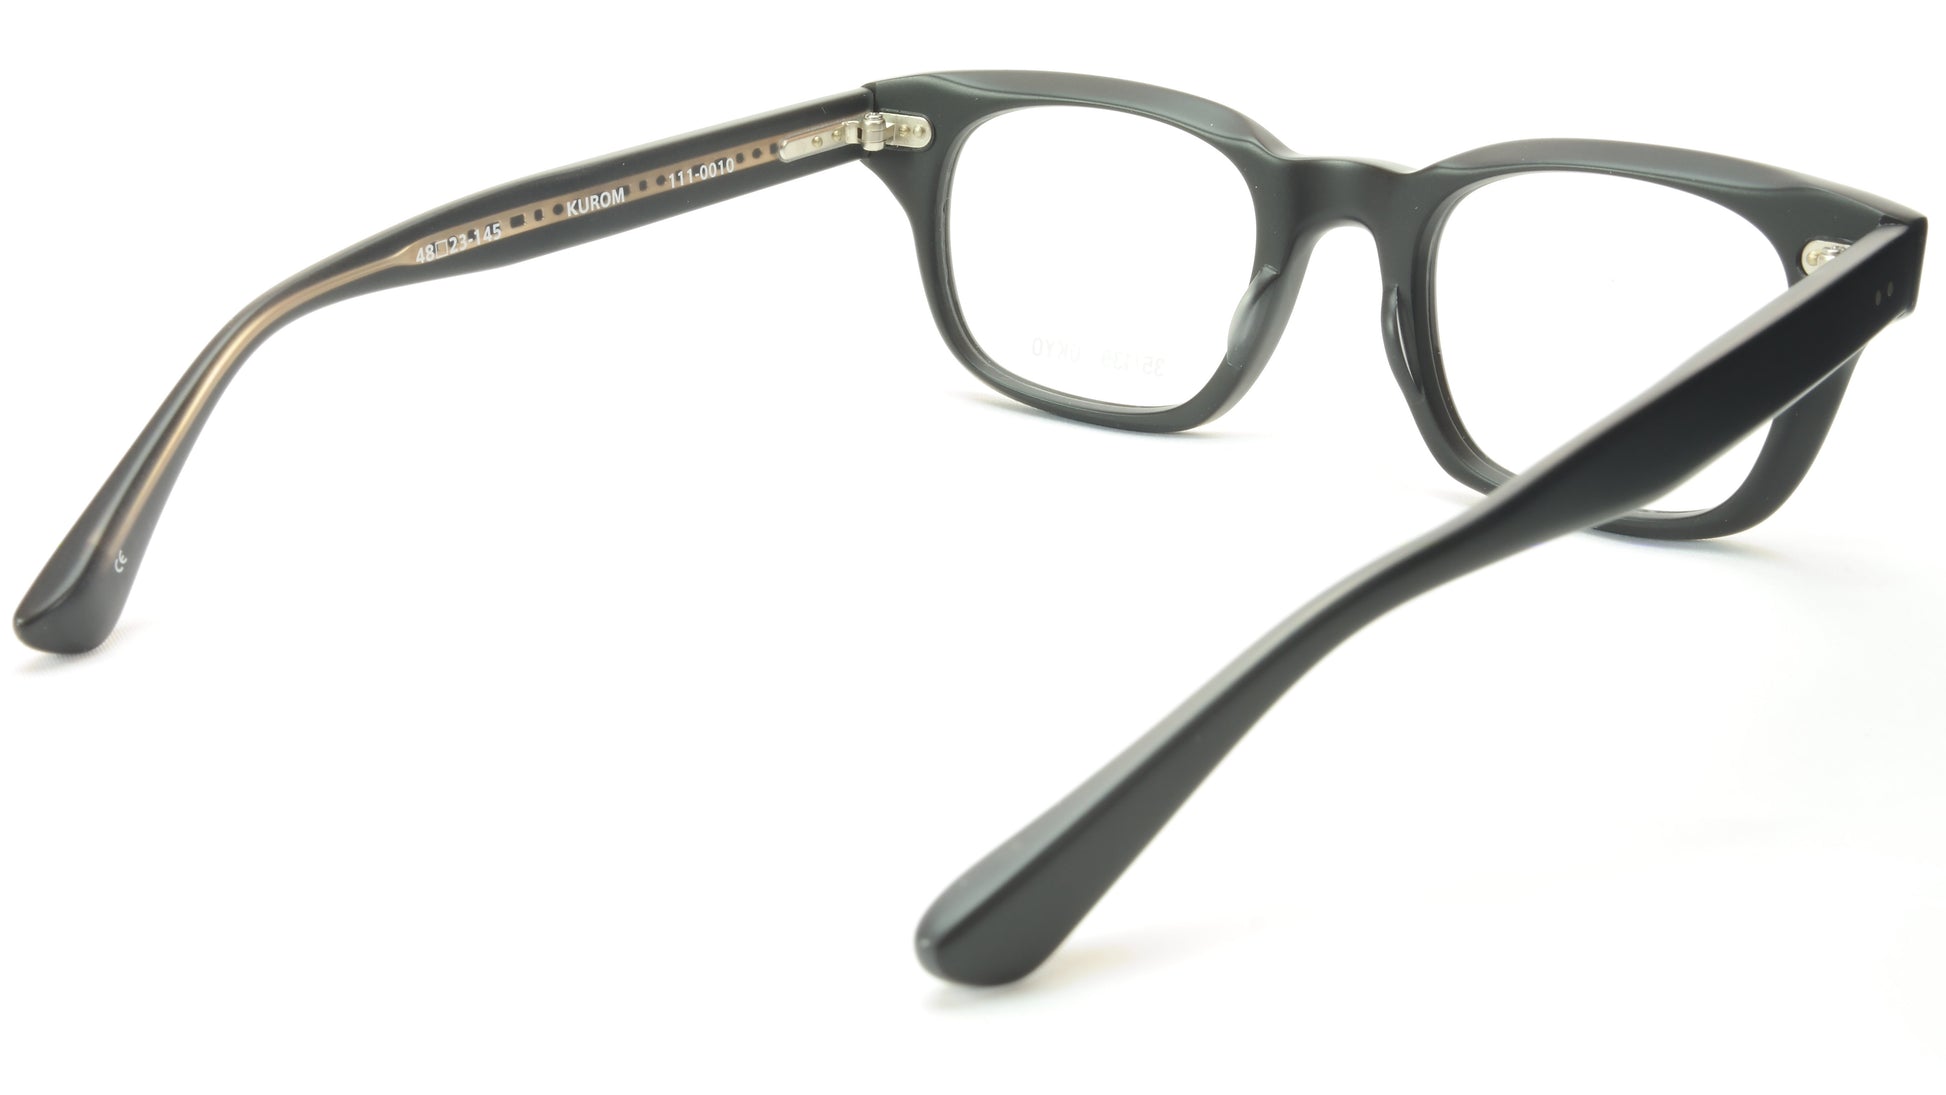 35/139 Tokyo KUROM 111-0010 Eyeglasses Frame Matte Black 48-23-145 Made in Japan - Frame Bay